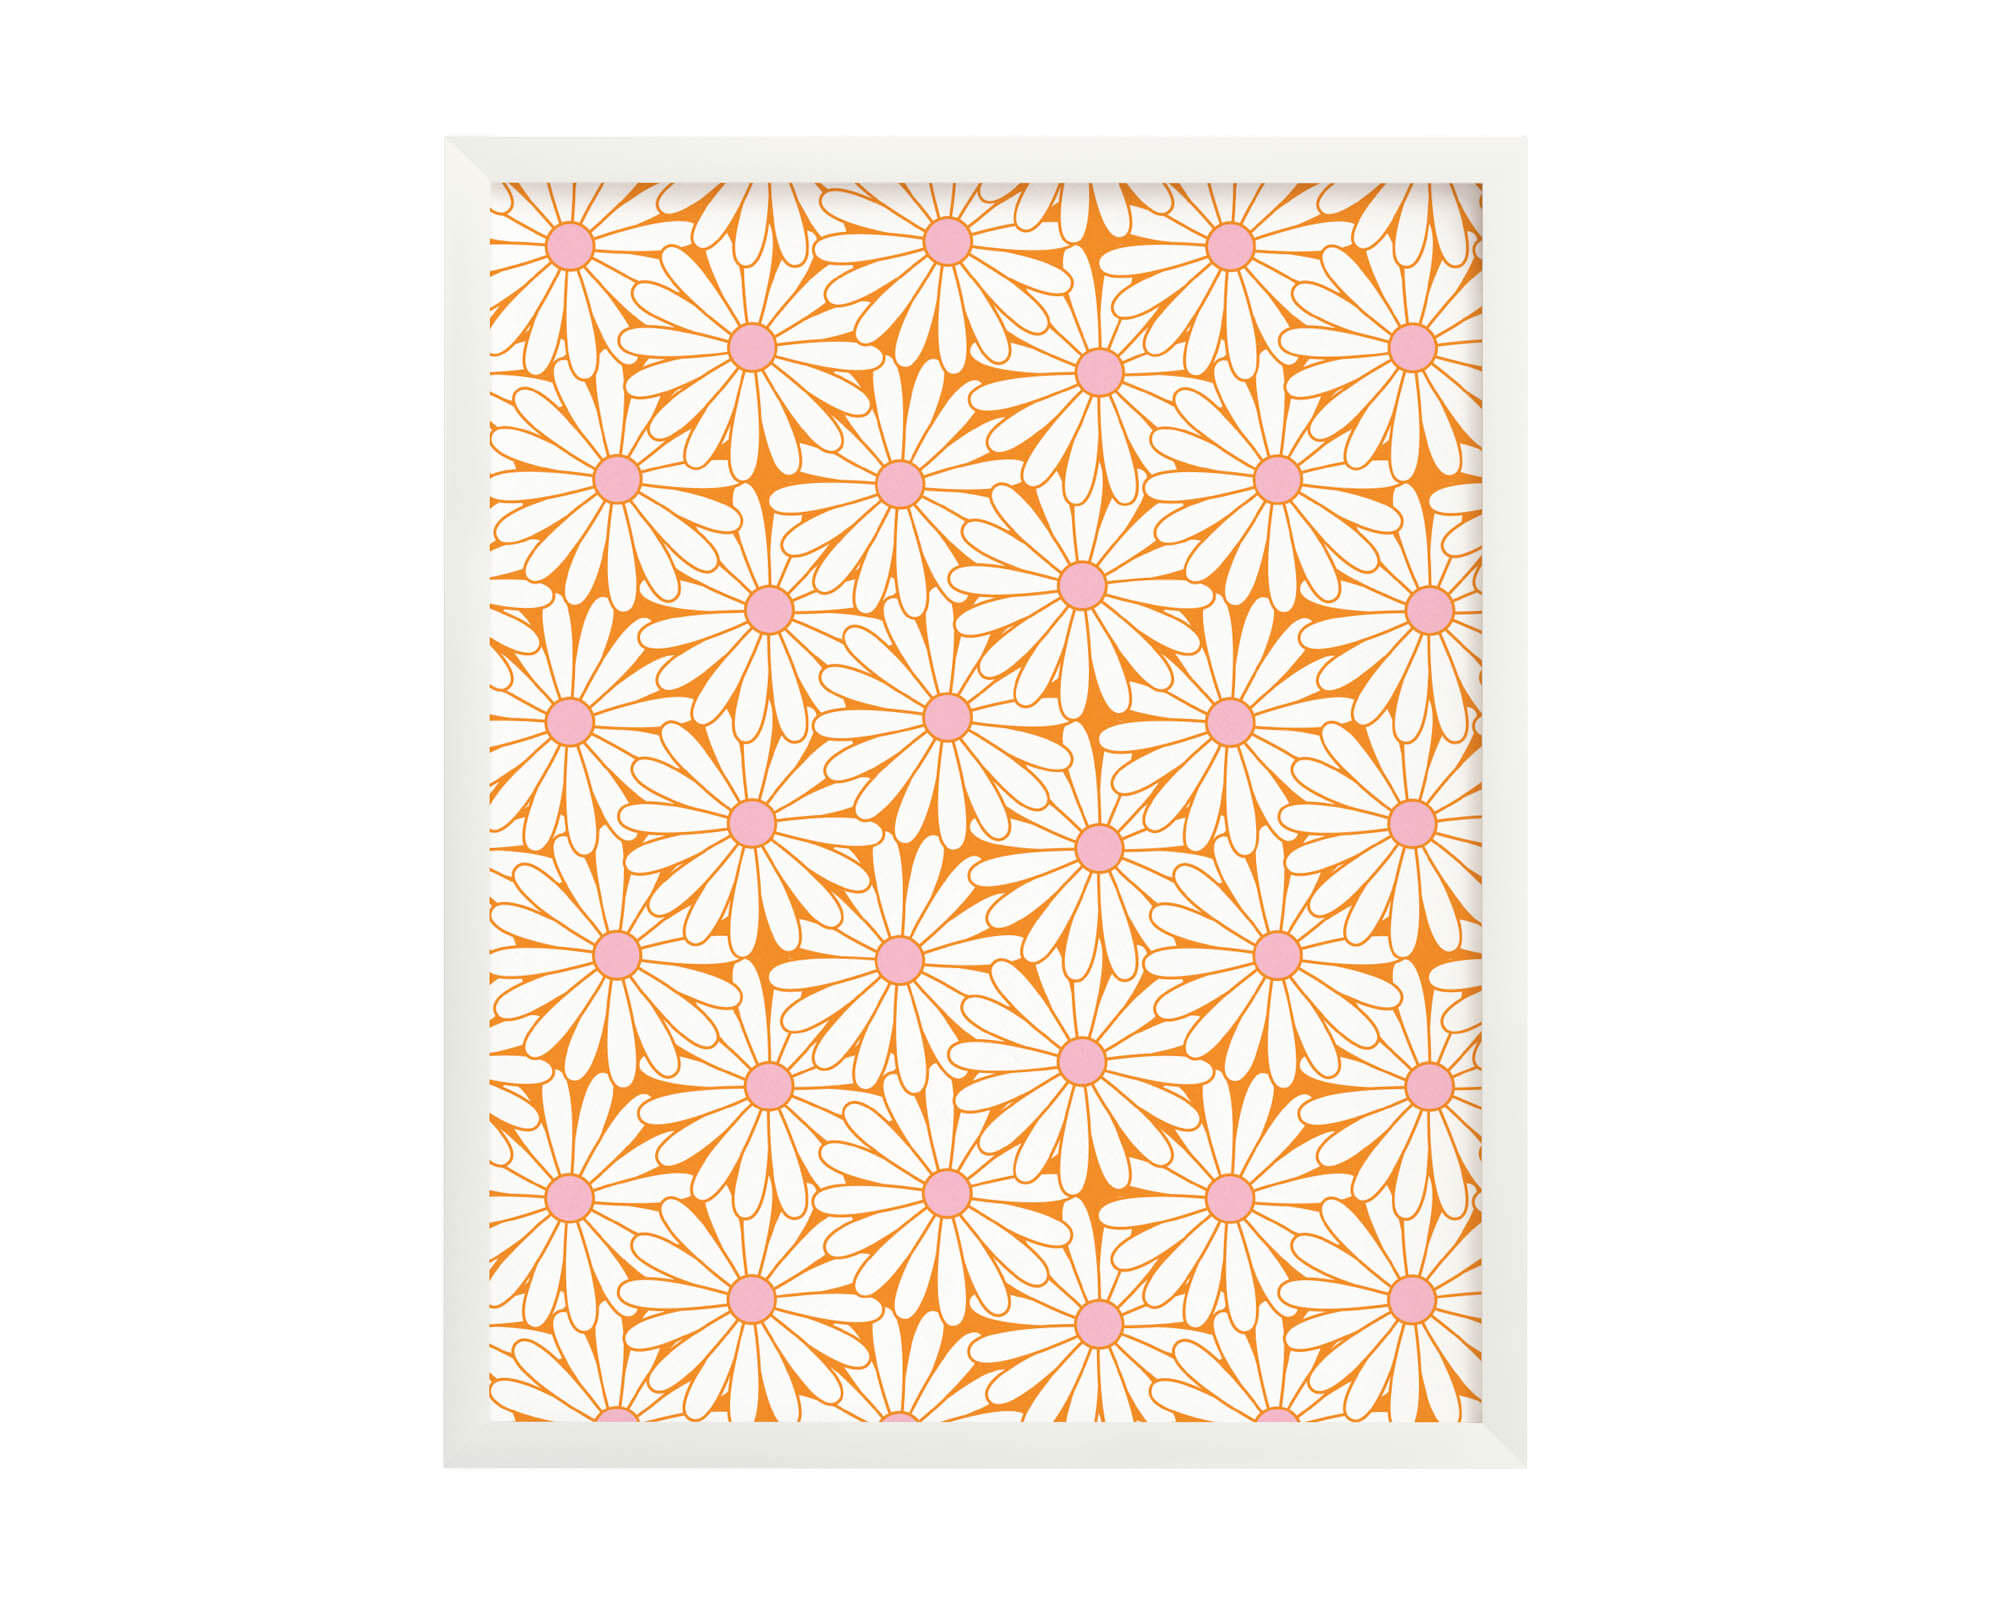 "Daisy Love" vibrant orange and pink modern floral daisy pattern archival giclée art print. Made in USA by My Darlin' @mydarlin_bk